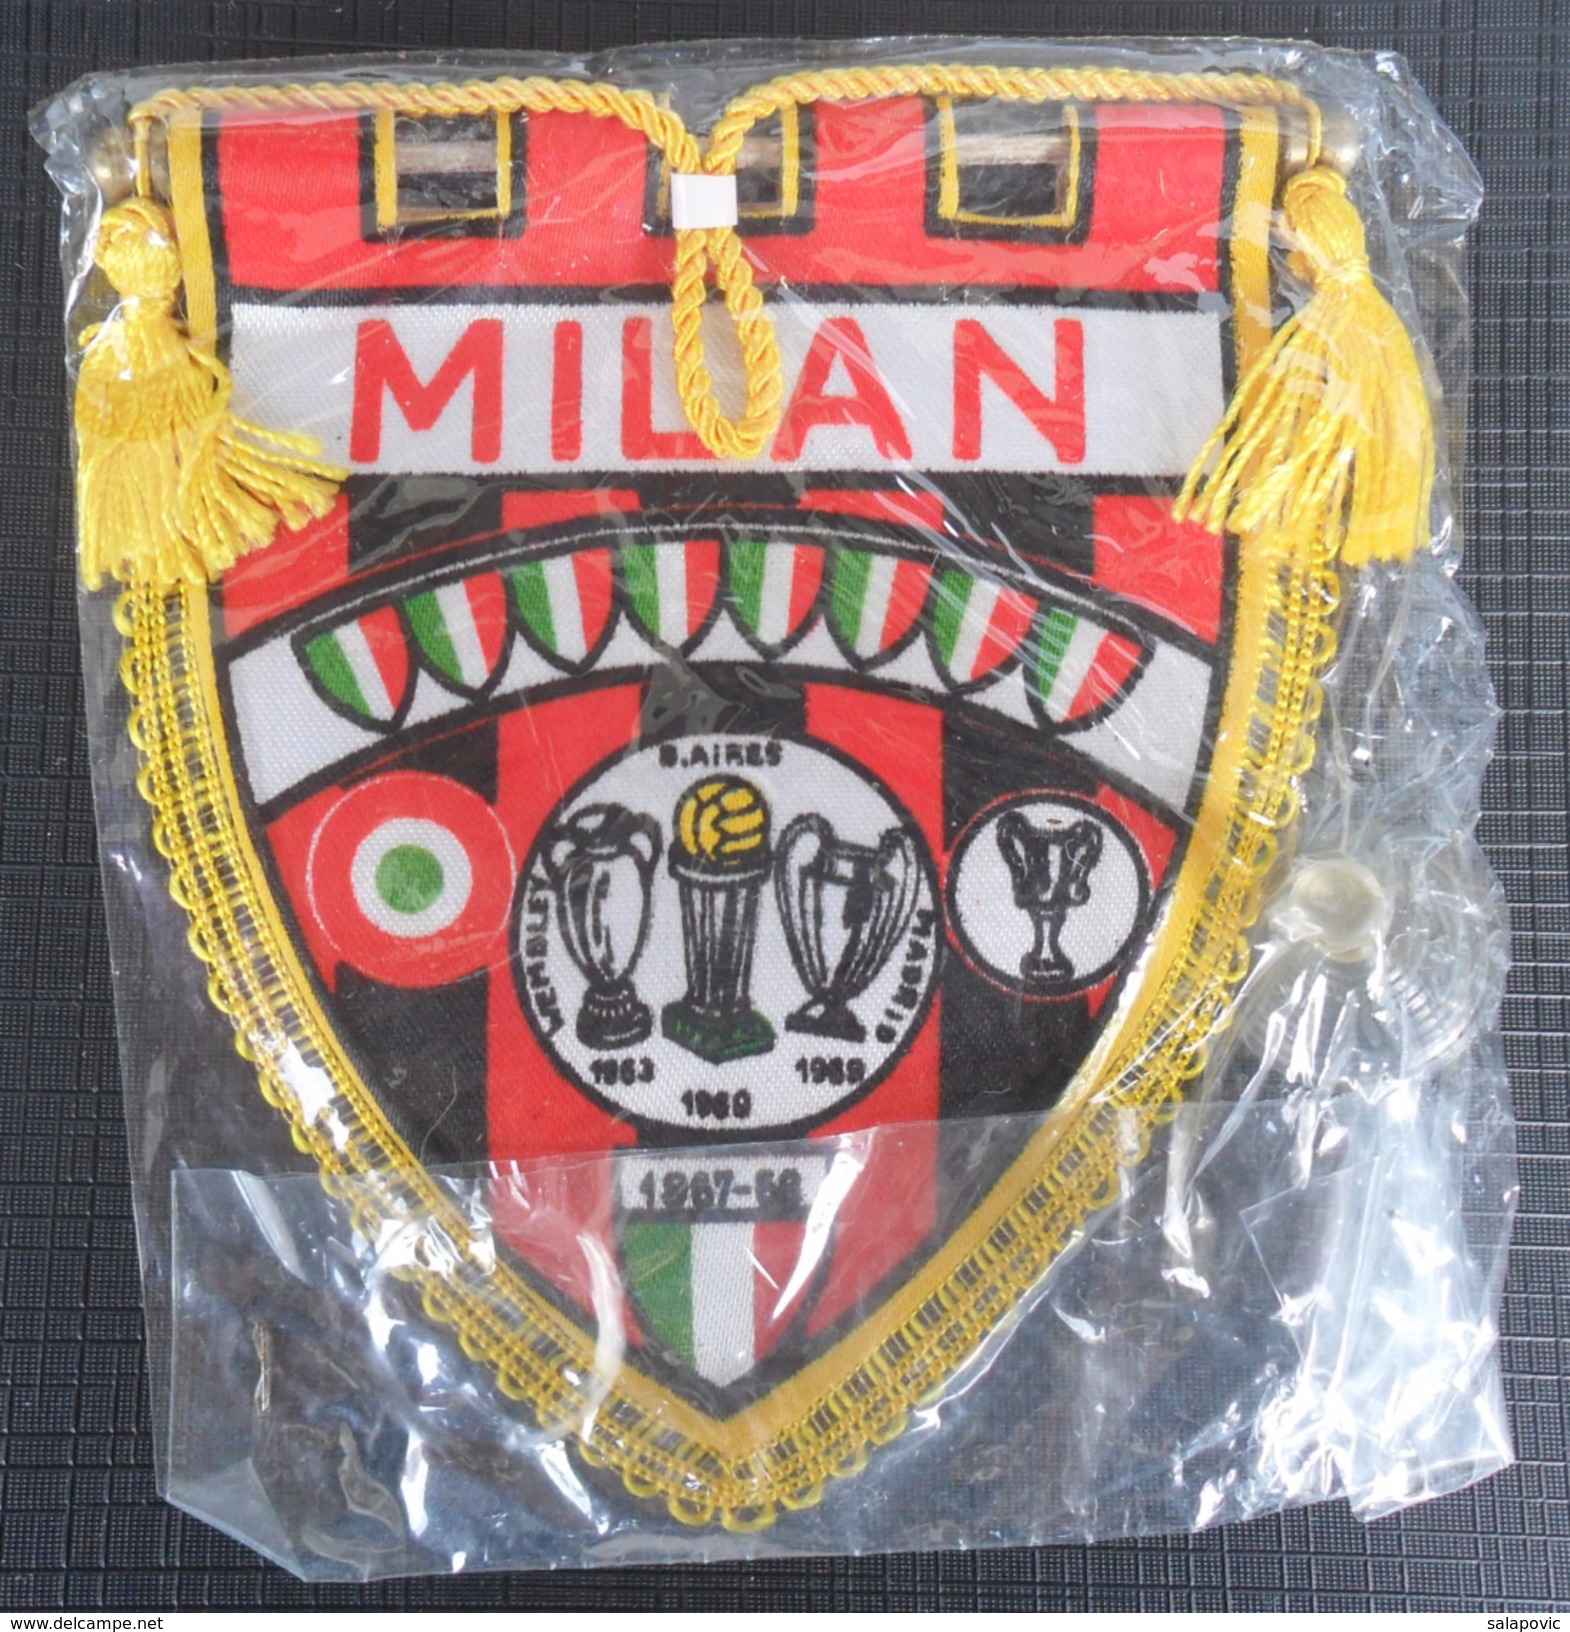 A.C. Milan, Milano  ITALY FOOTBALL CLUB CALCIO OLD PENNANT (not Banned) - Uniformes Recordatorios & Misc